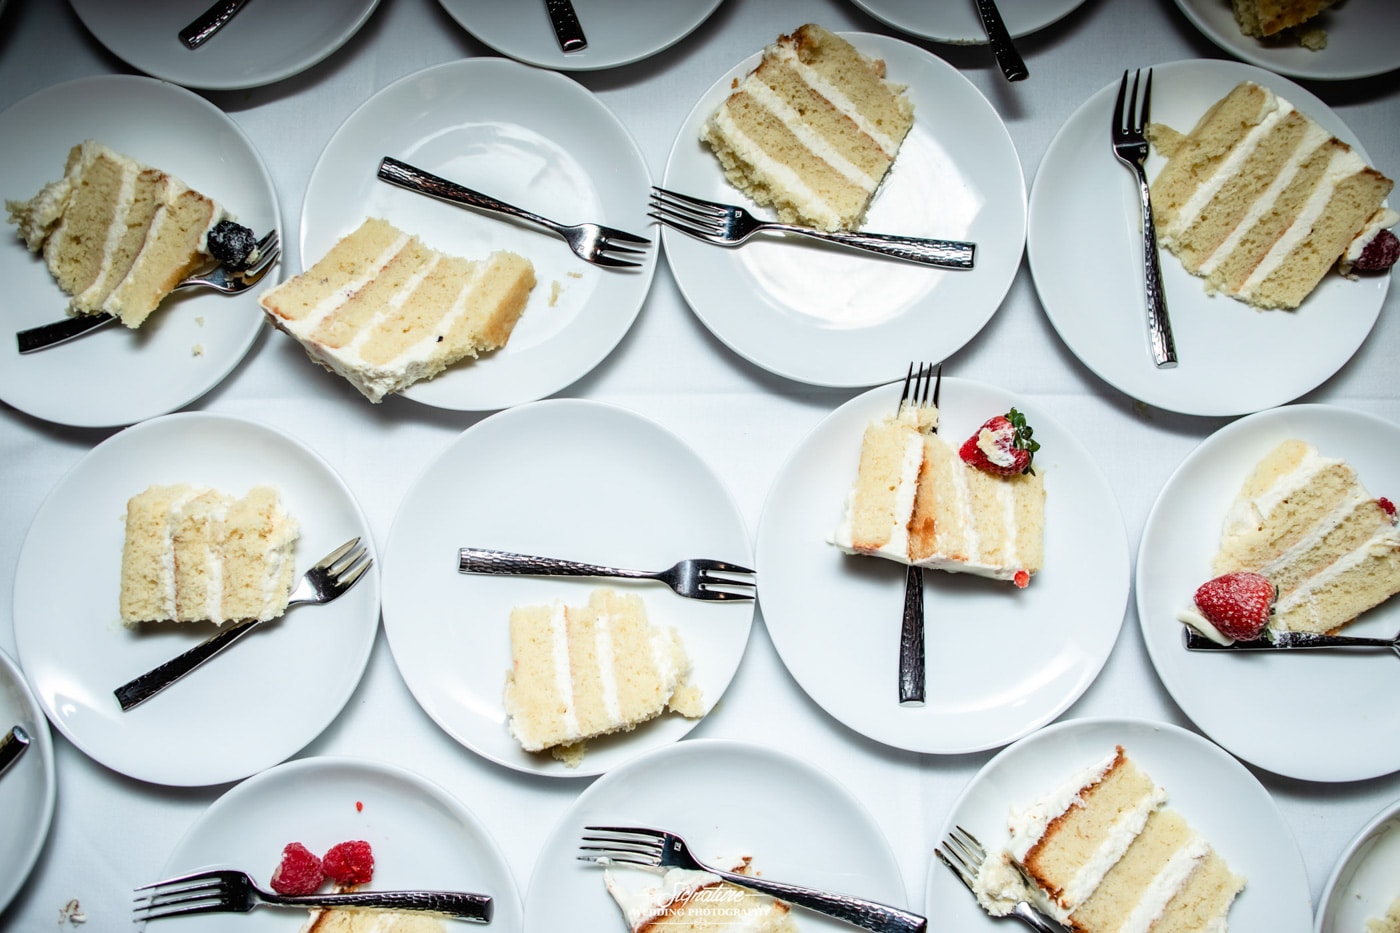 Slices of wedding cake on plates